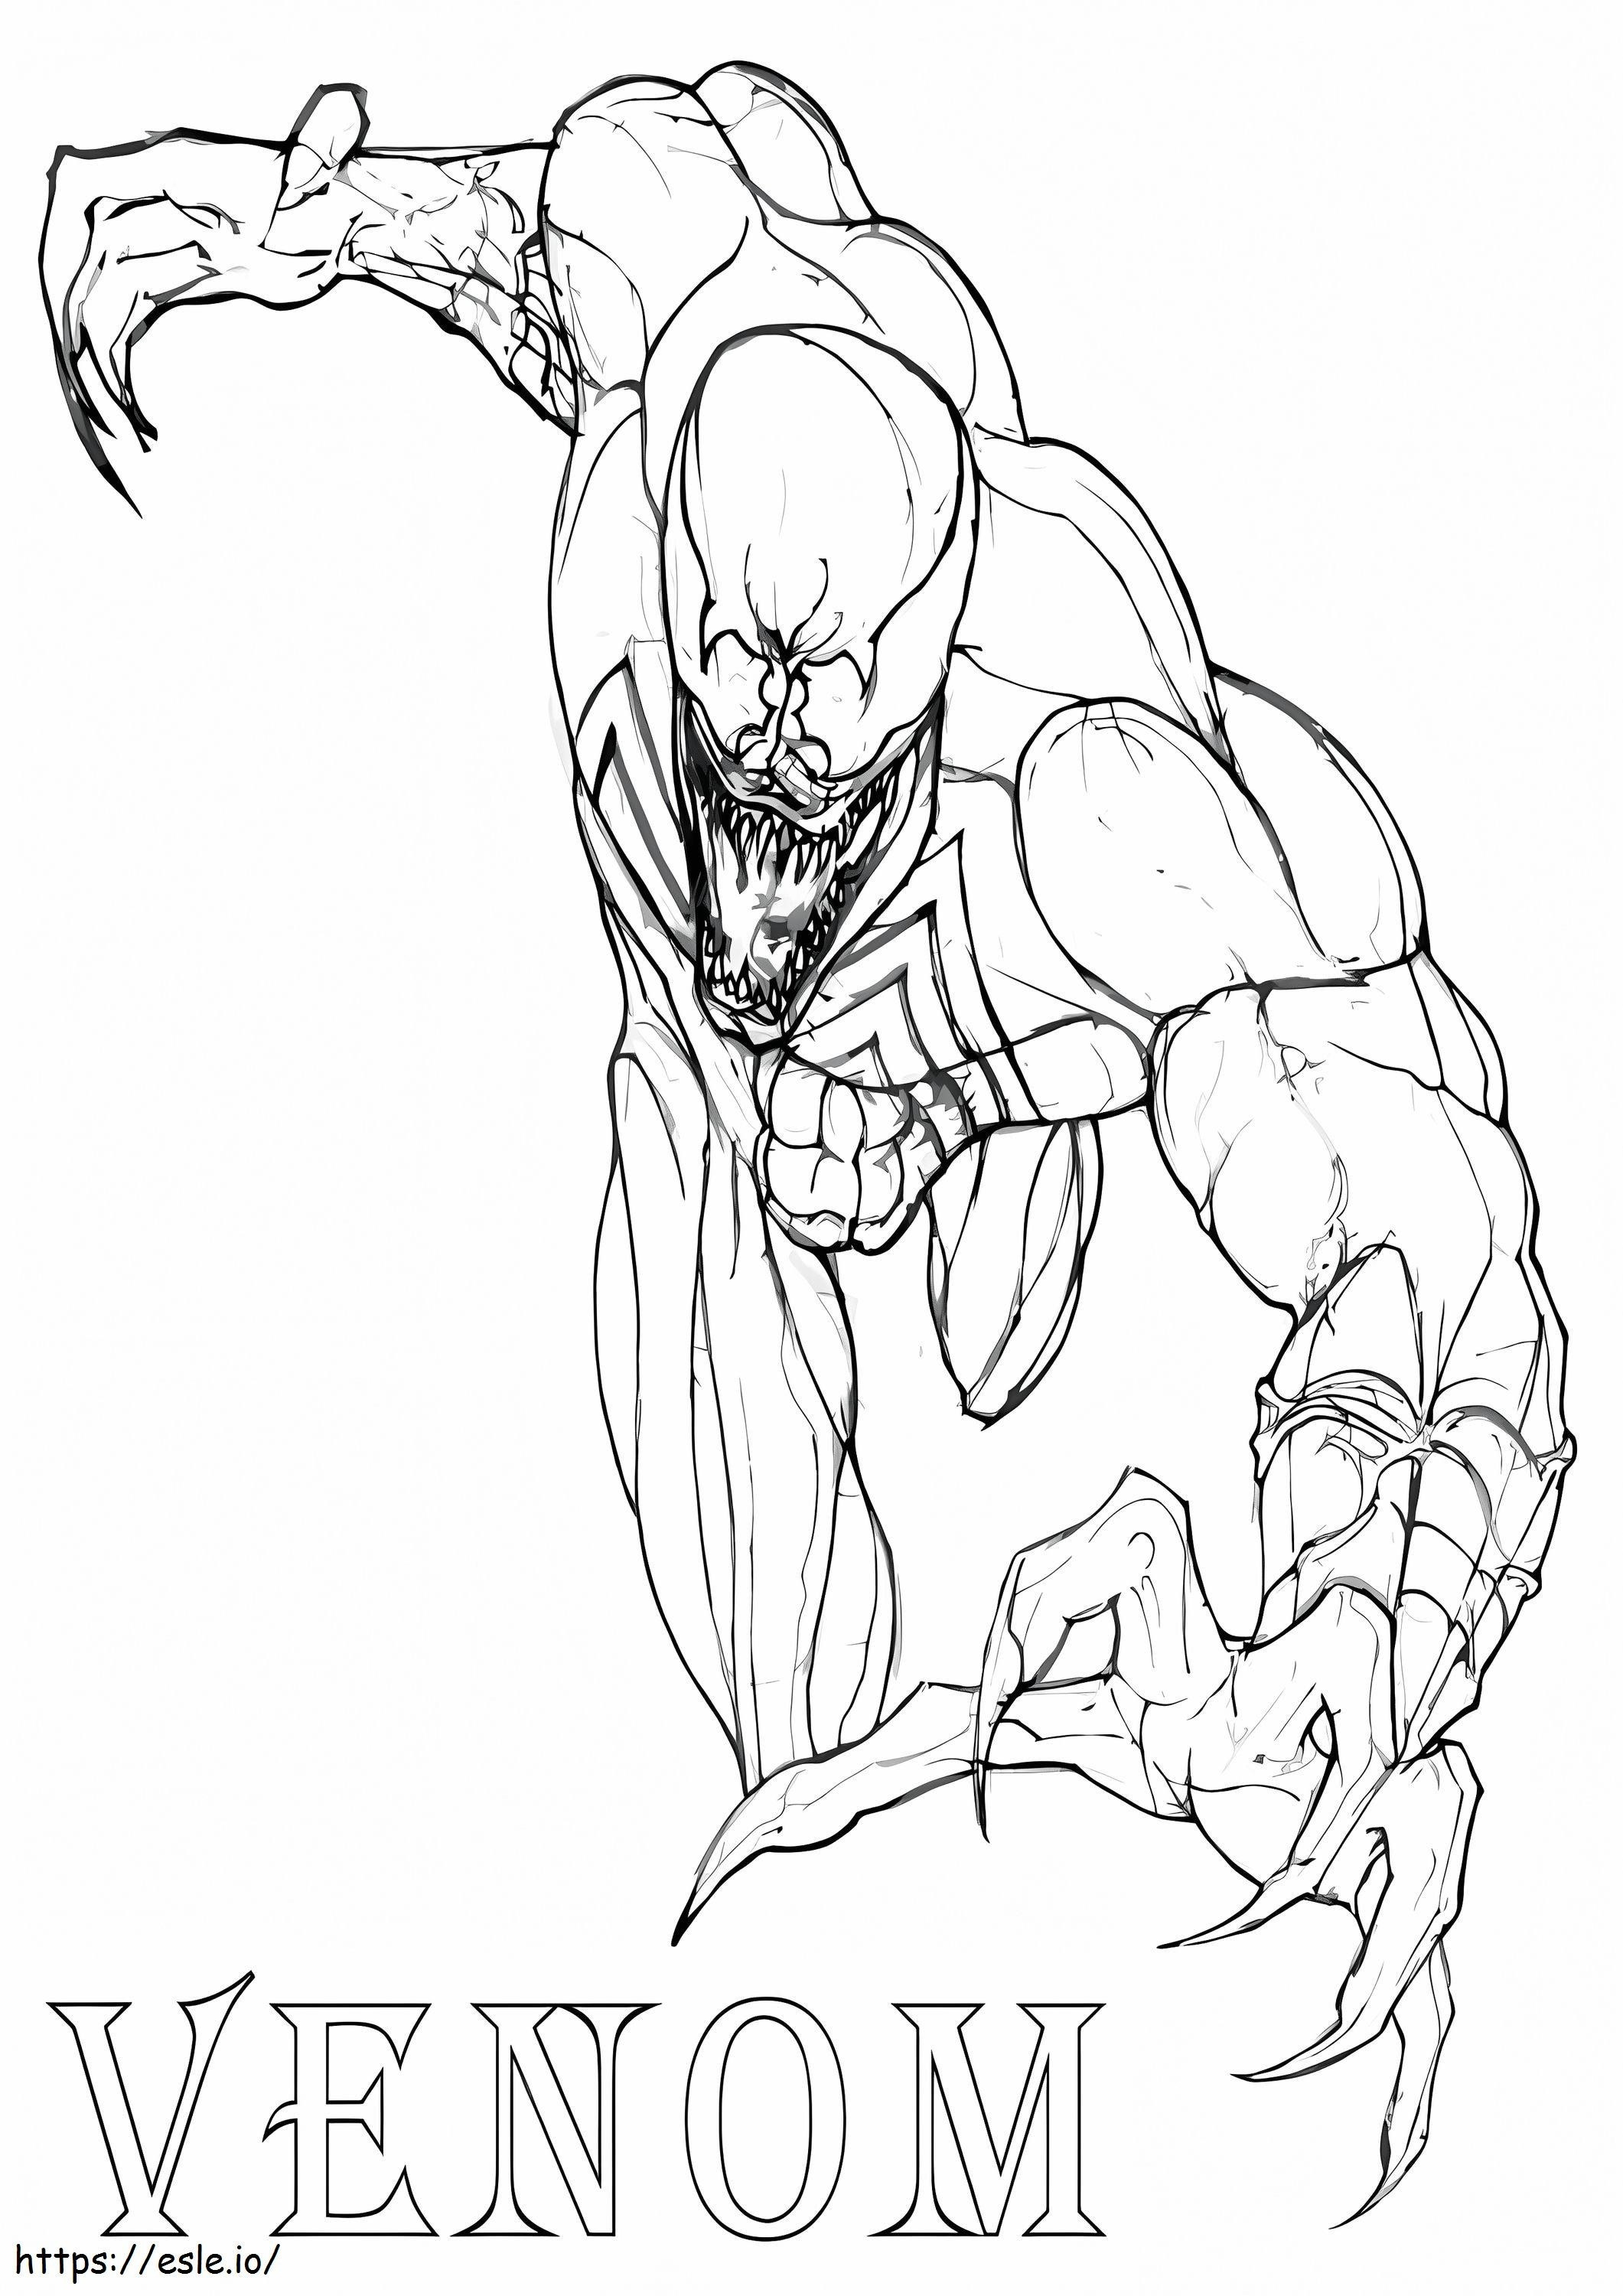 Venom Attacking coloring page